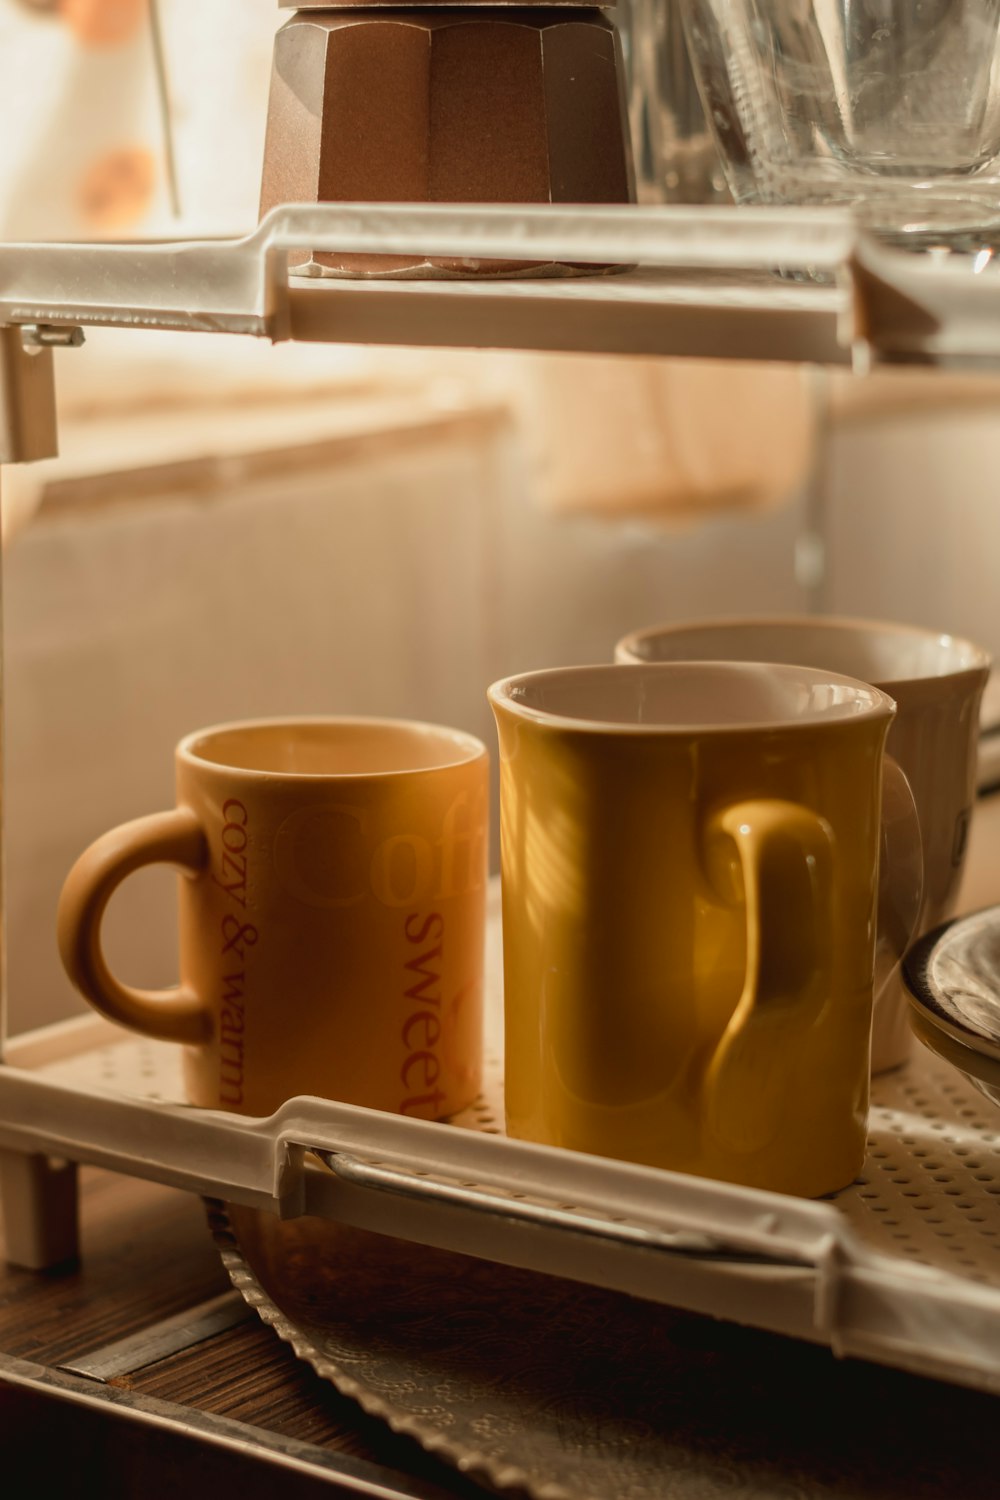 yellow ceramic mug on stainless steel sink